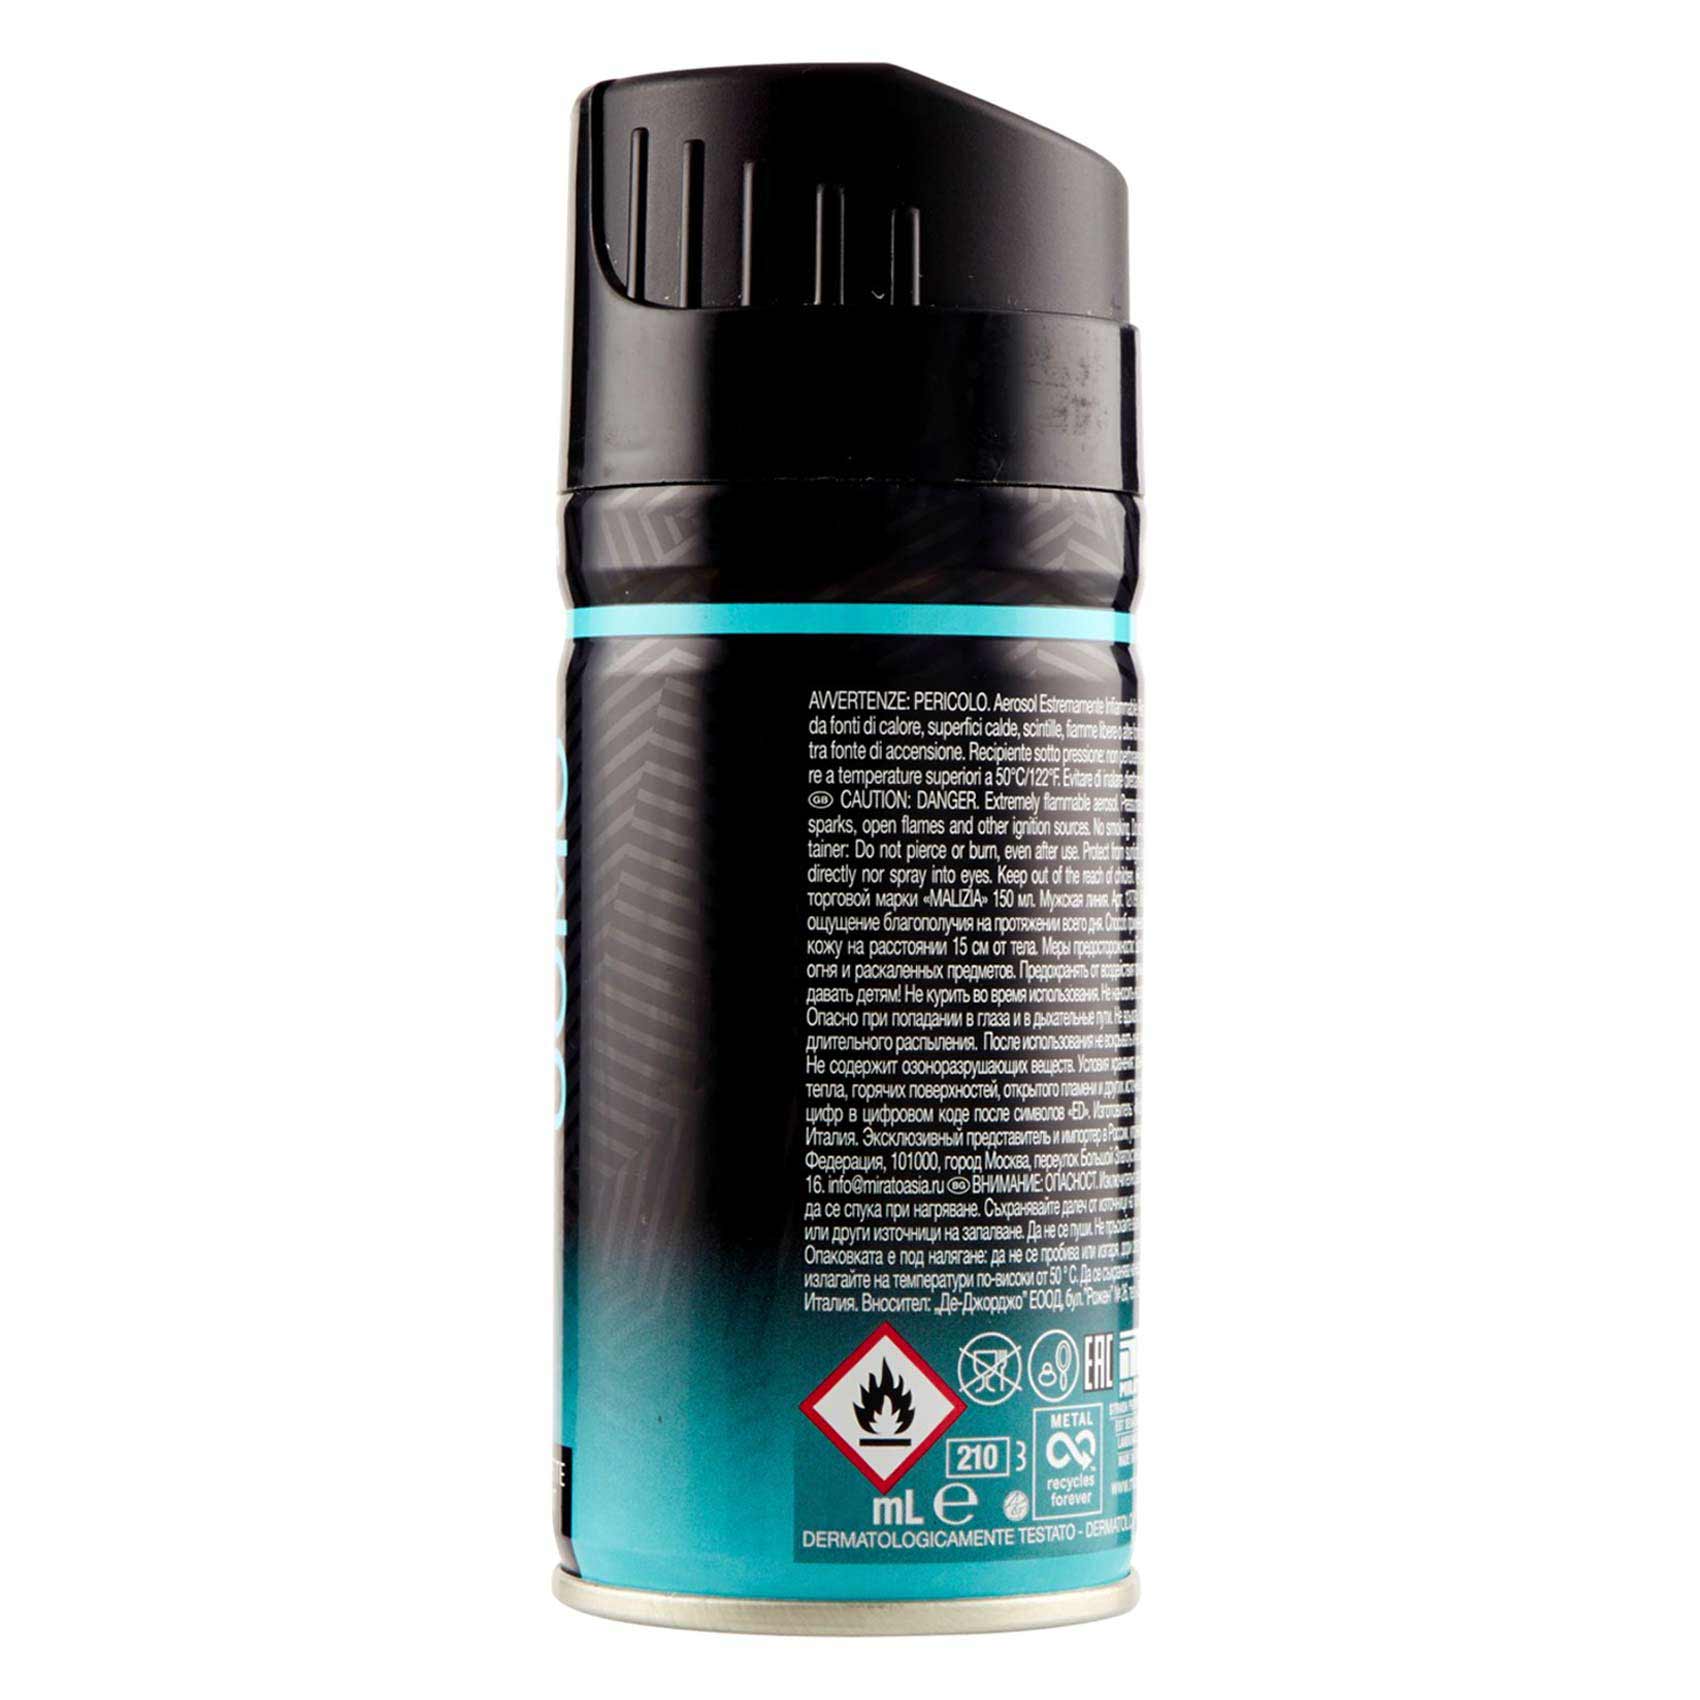 Malizia Uomo Aqua Deodorant 150ml + 50ml Free